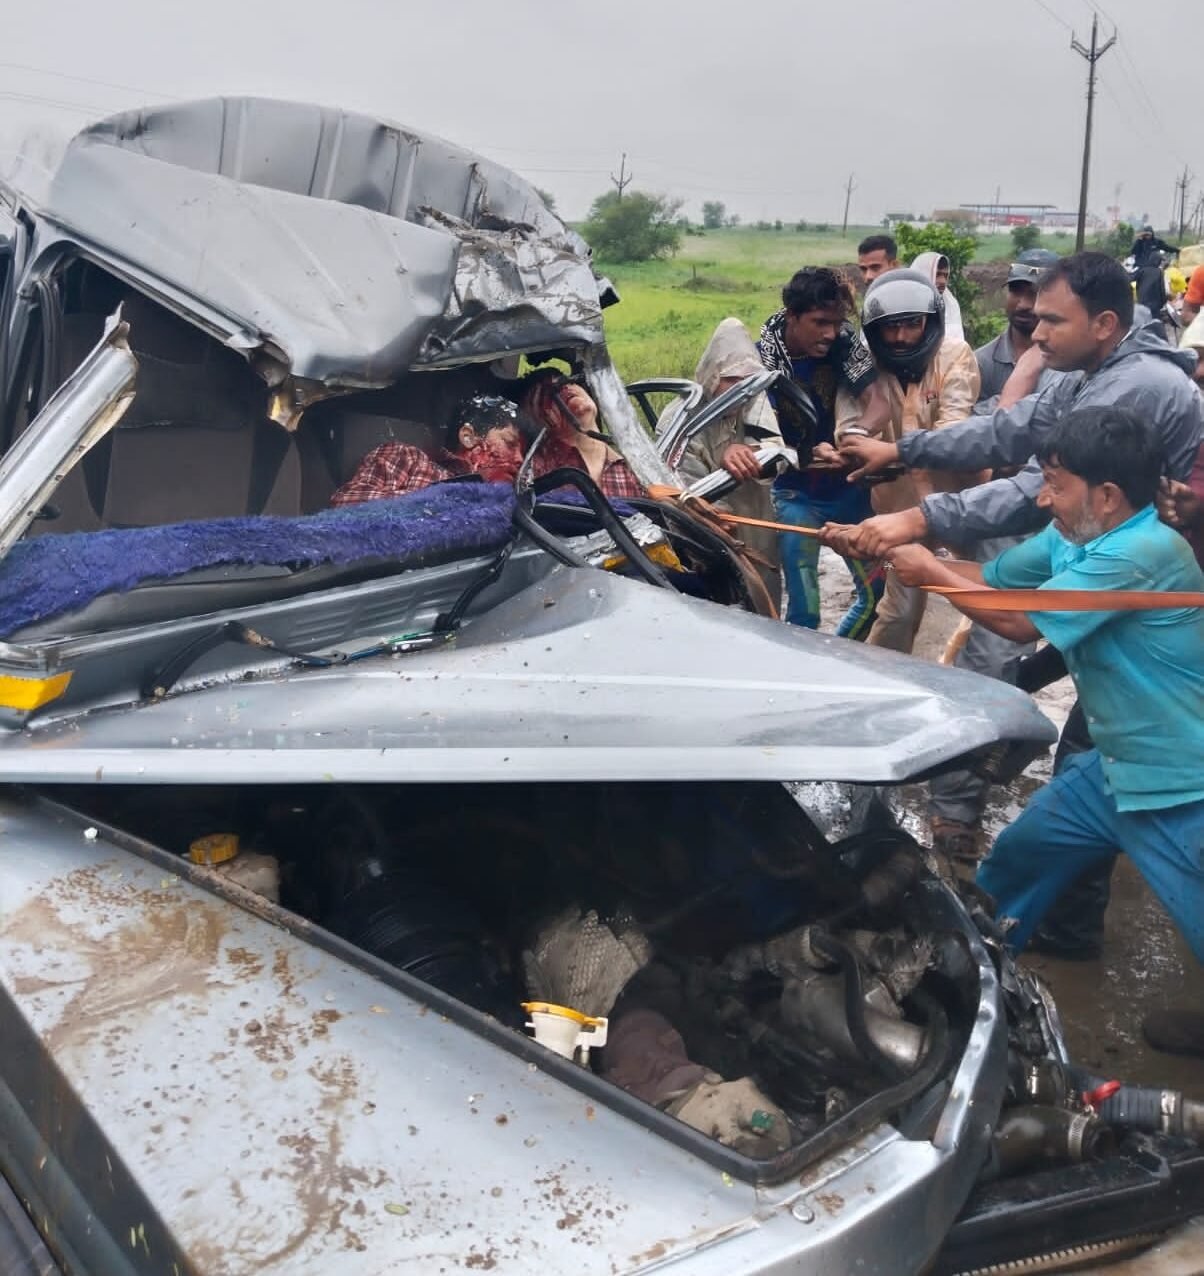 nagda-news-truck-school-vehicle-collision-in-mp-4-school-children-killed-11-injured-accident-on-ujjain-nagda-road